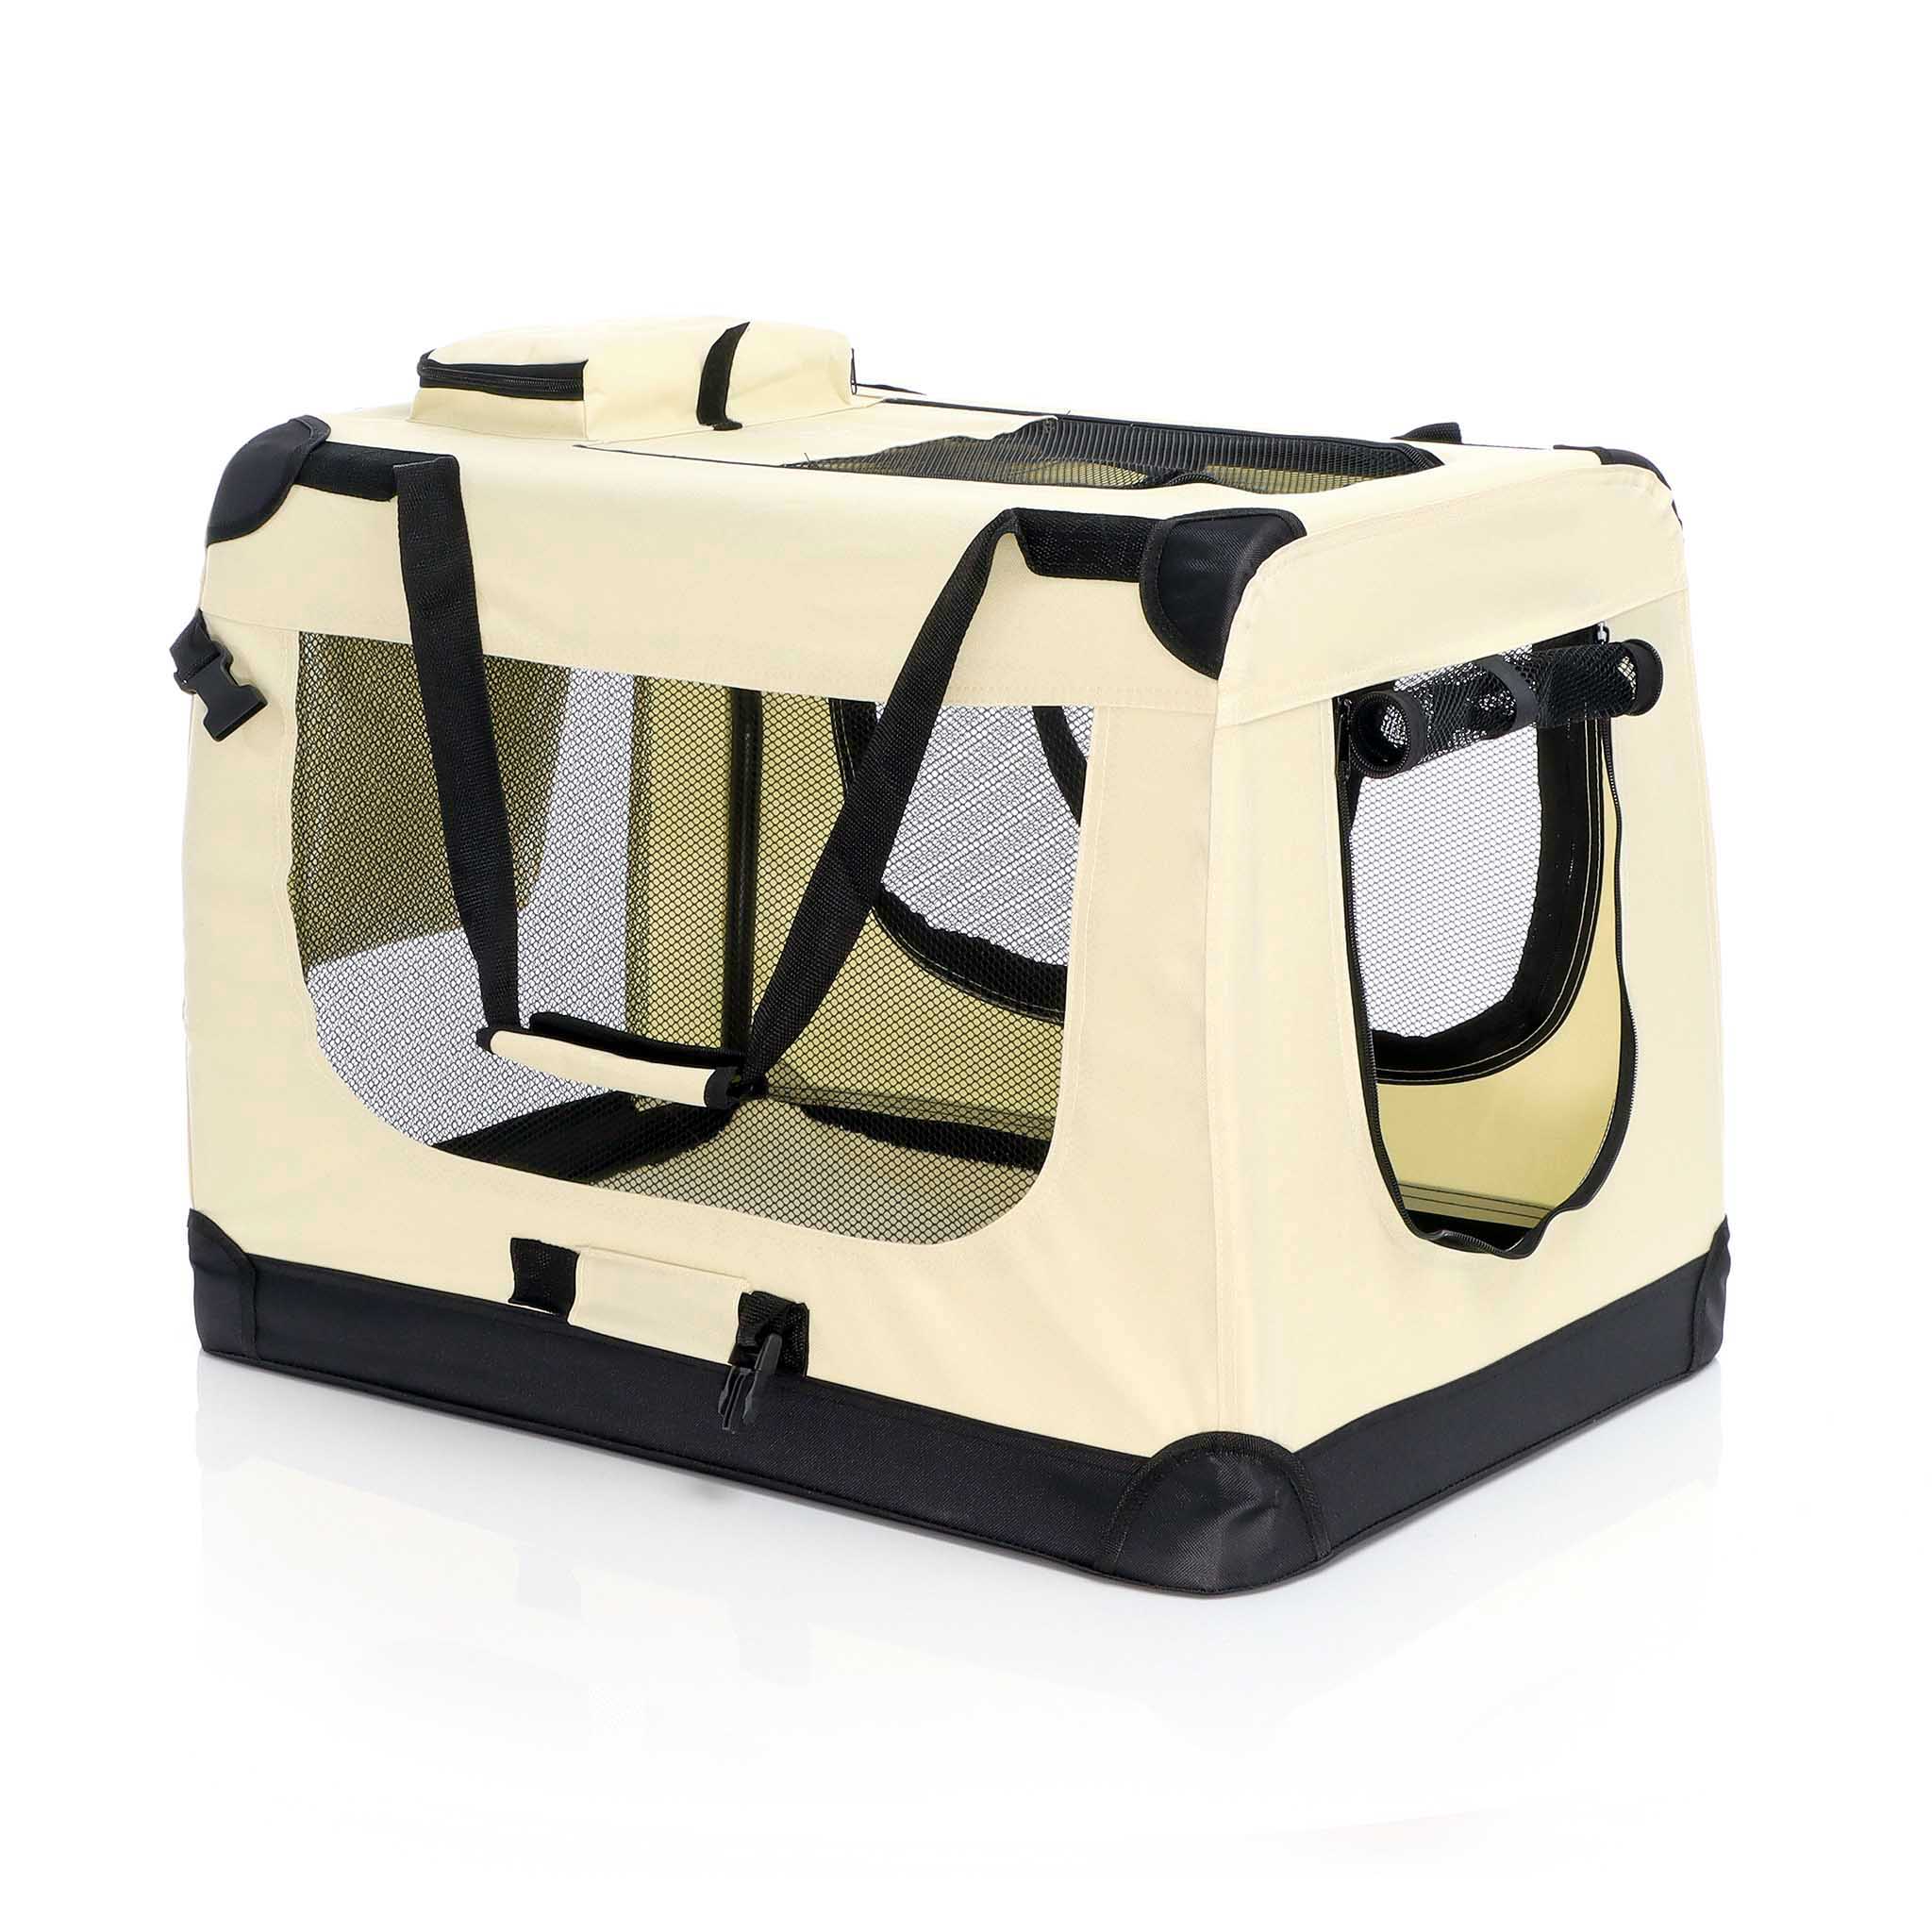 Fudajo faltbare Transportbox Beige für Haustiere Gr. XL (80x58x56 cm)